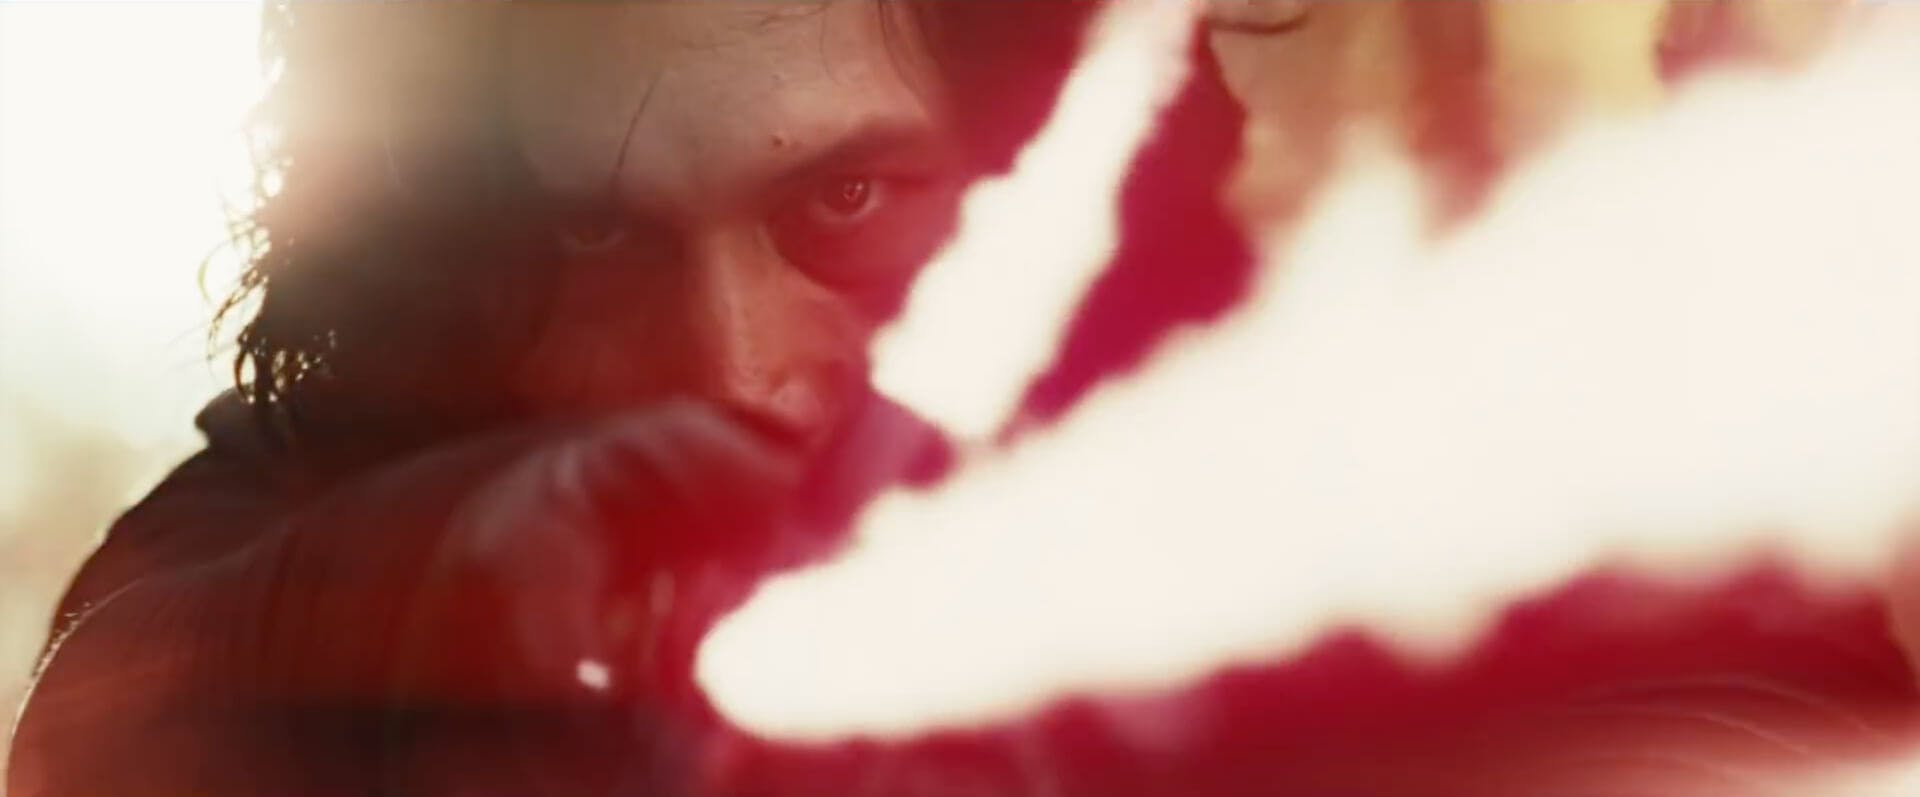 star wars movies ranking The Force Awakens - Kylo Ren